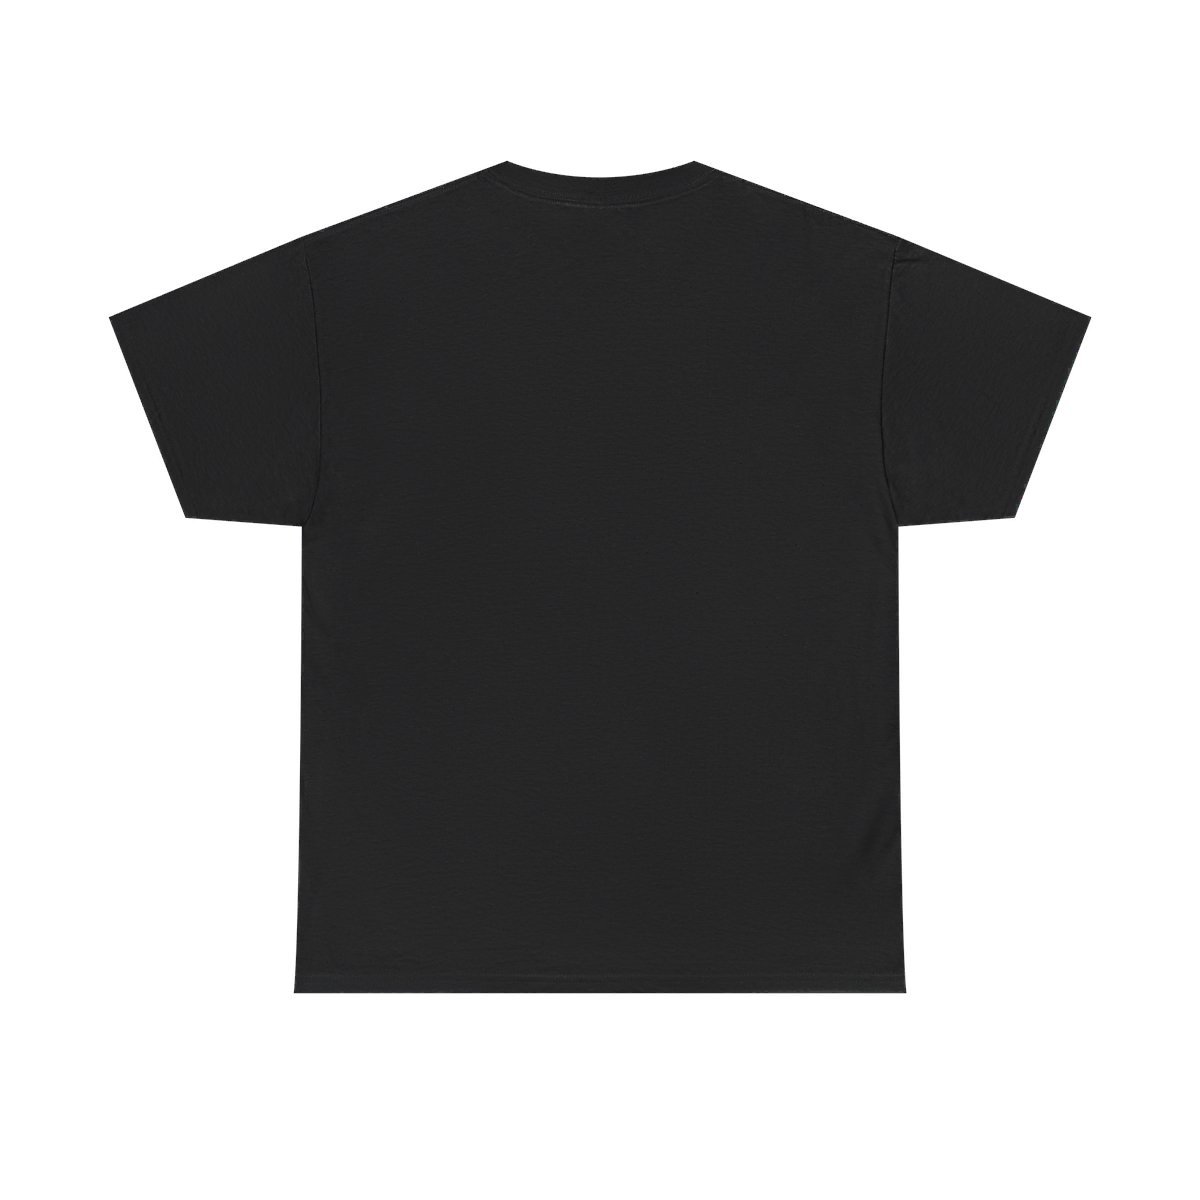 Motivik – The Head Collector Short Sleeve Tshirt